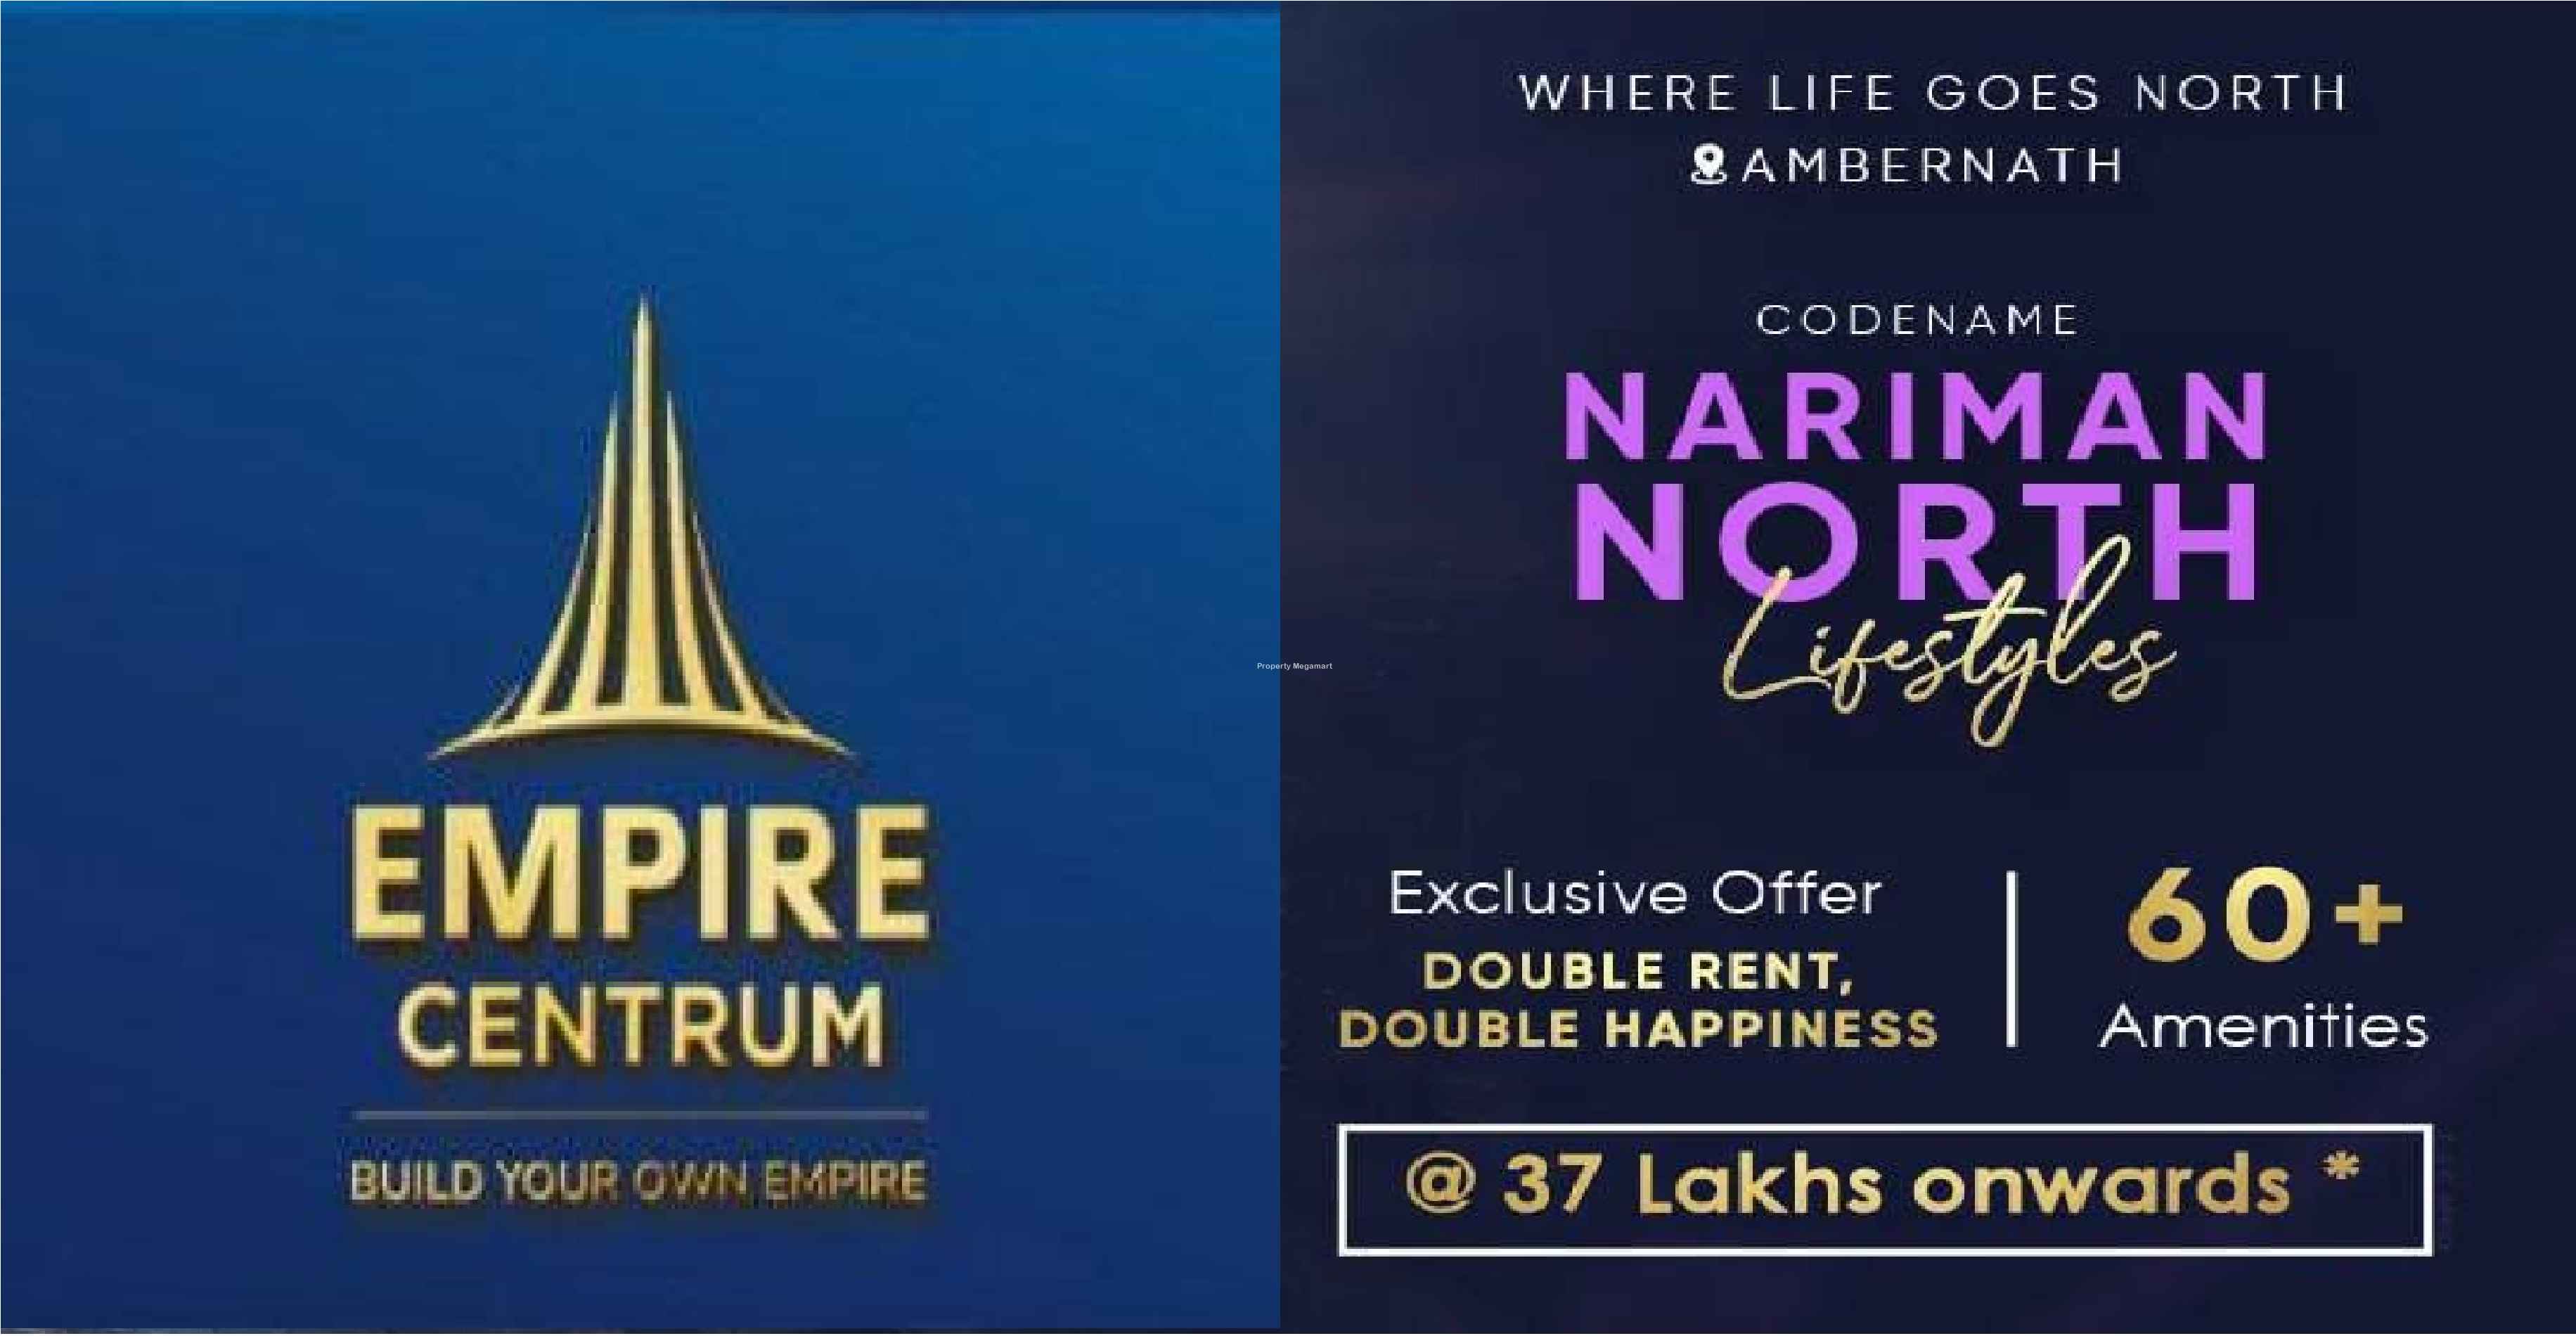 Nariman North Lifestyles